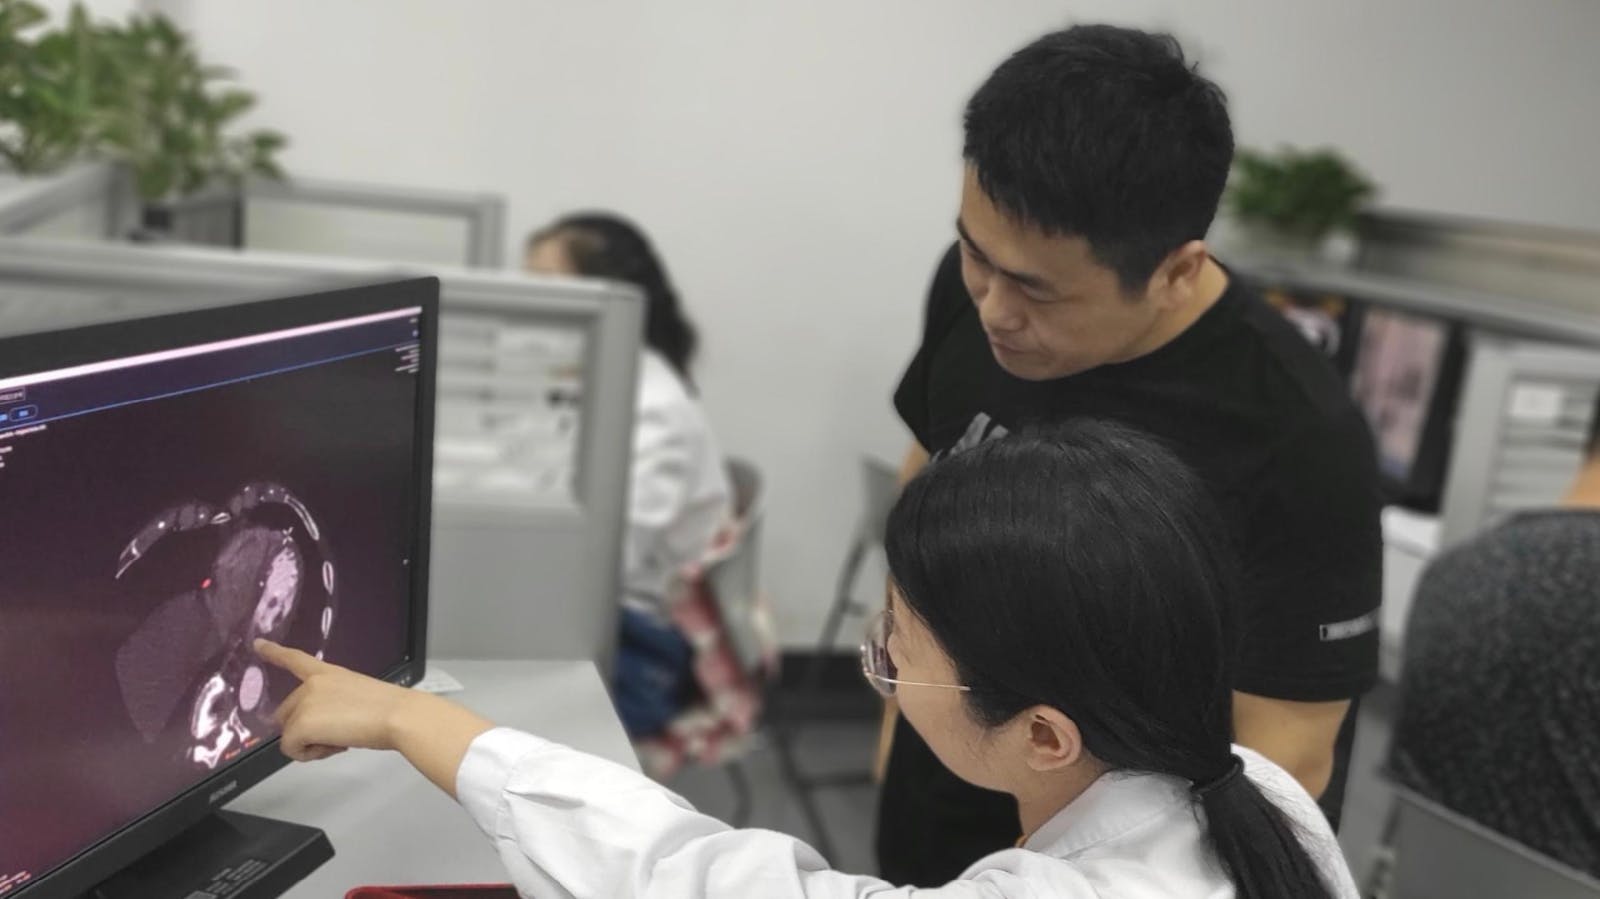 Shukun employees examine a scan. Photo courtesy of Shukun Technology.